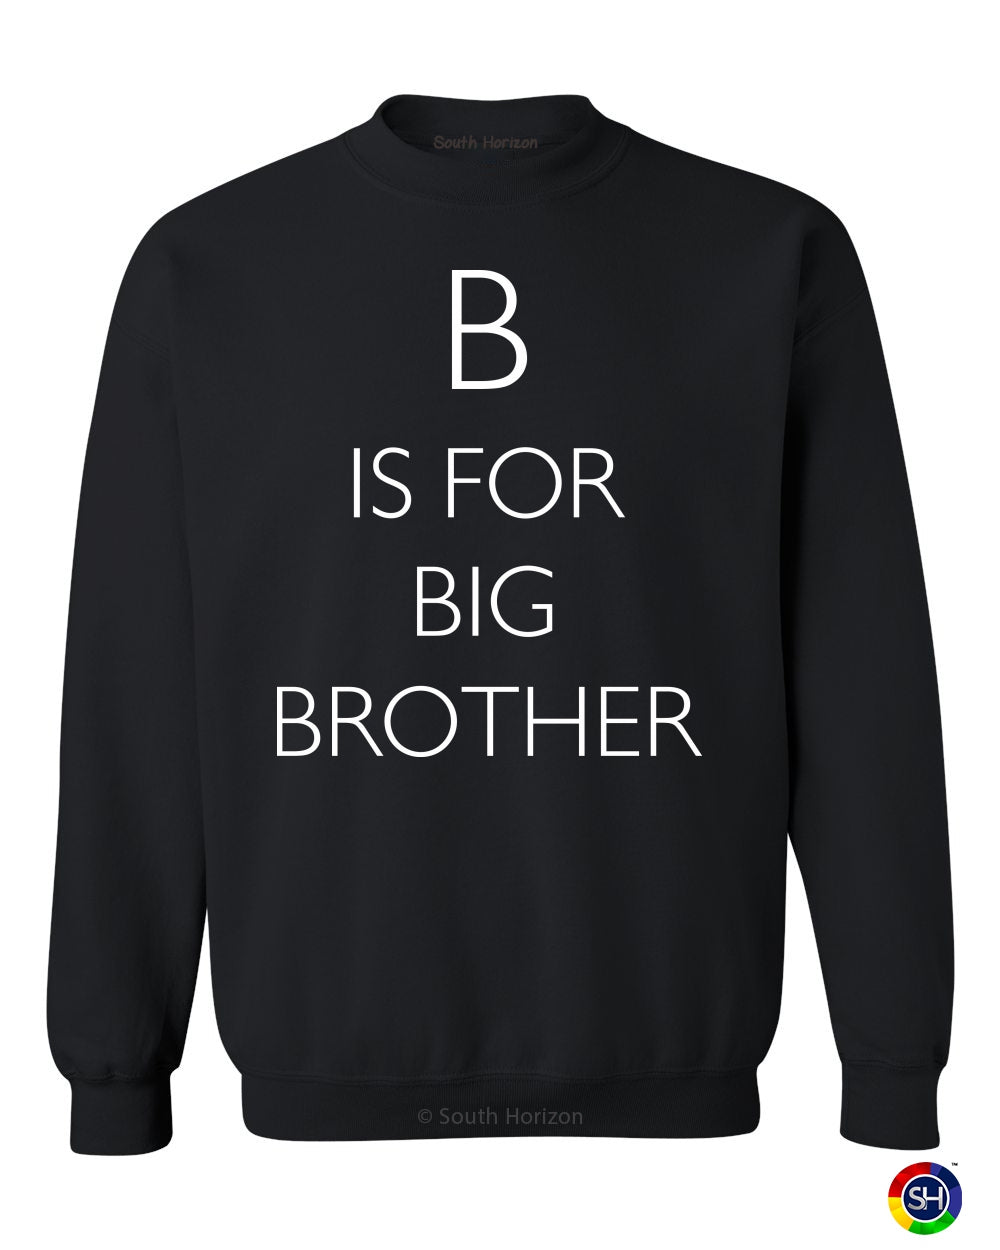 B is for Big Brother on SweatShirt